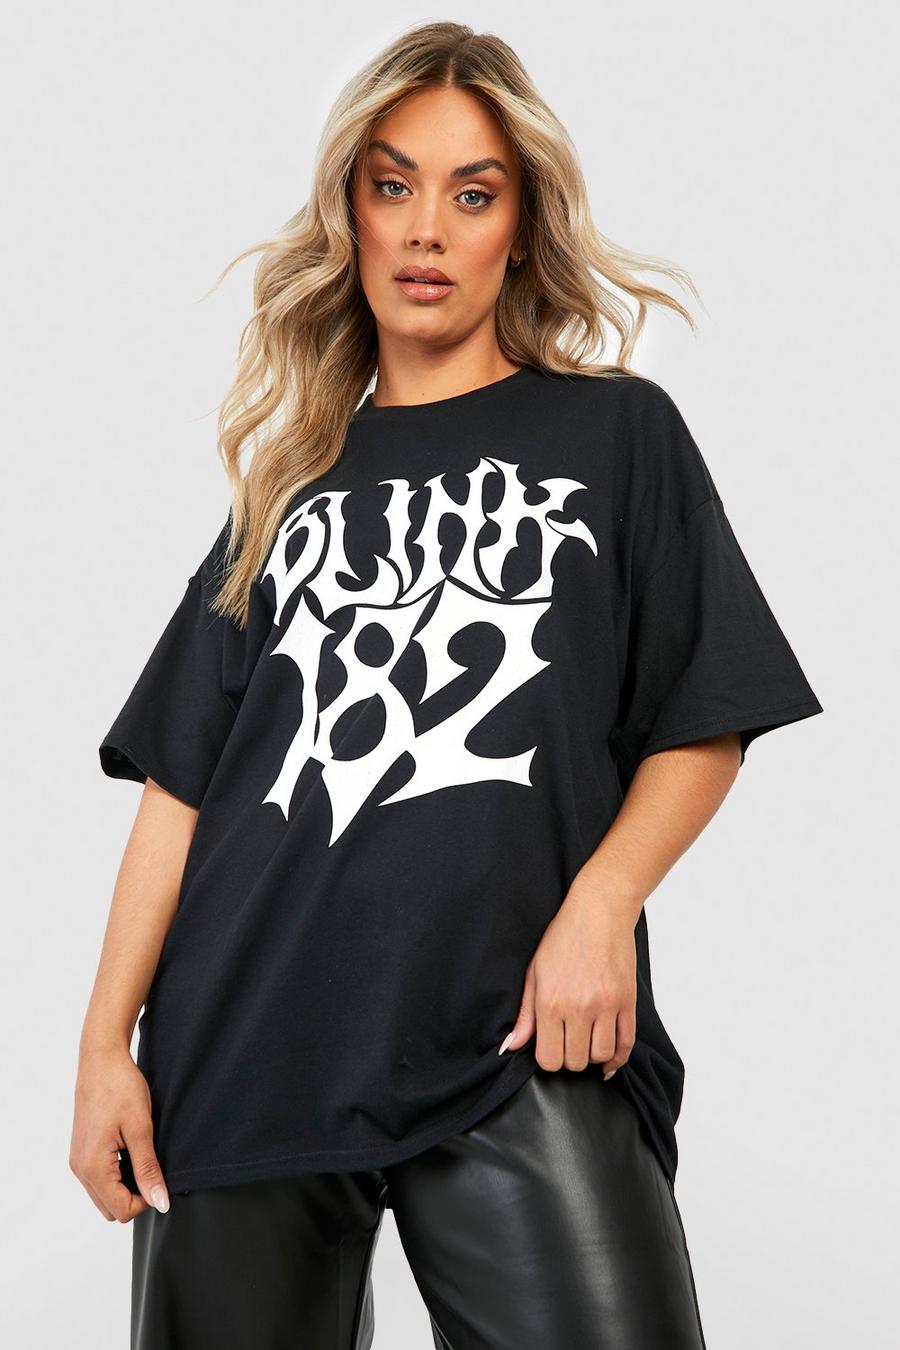 Black nero Plus Oversized Blink 182 License T-shirt image number 1